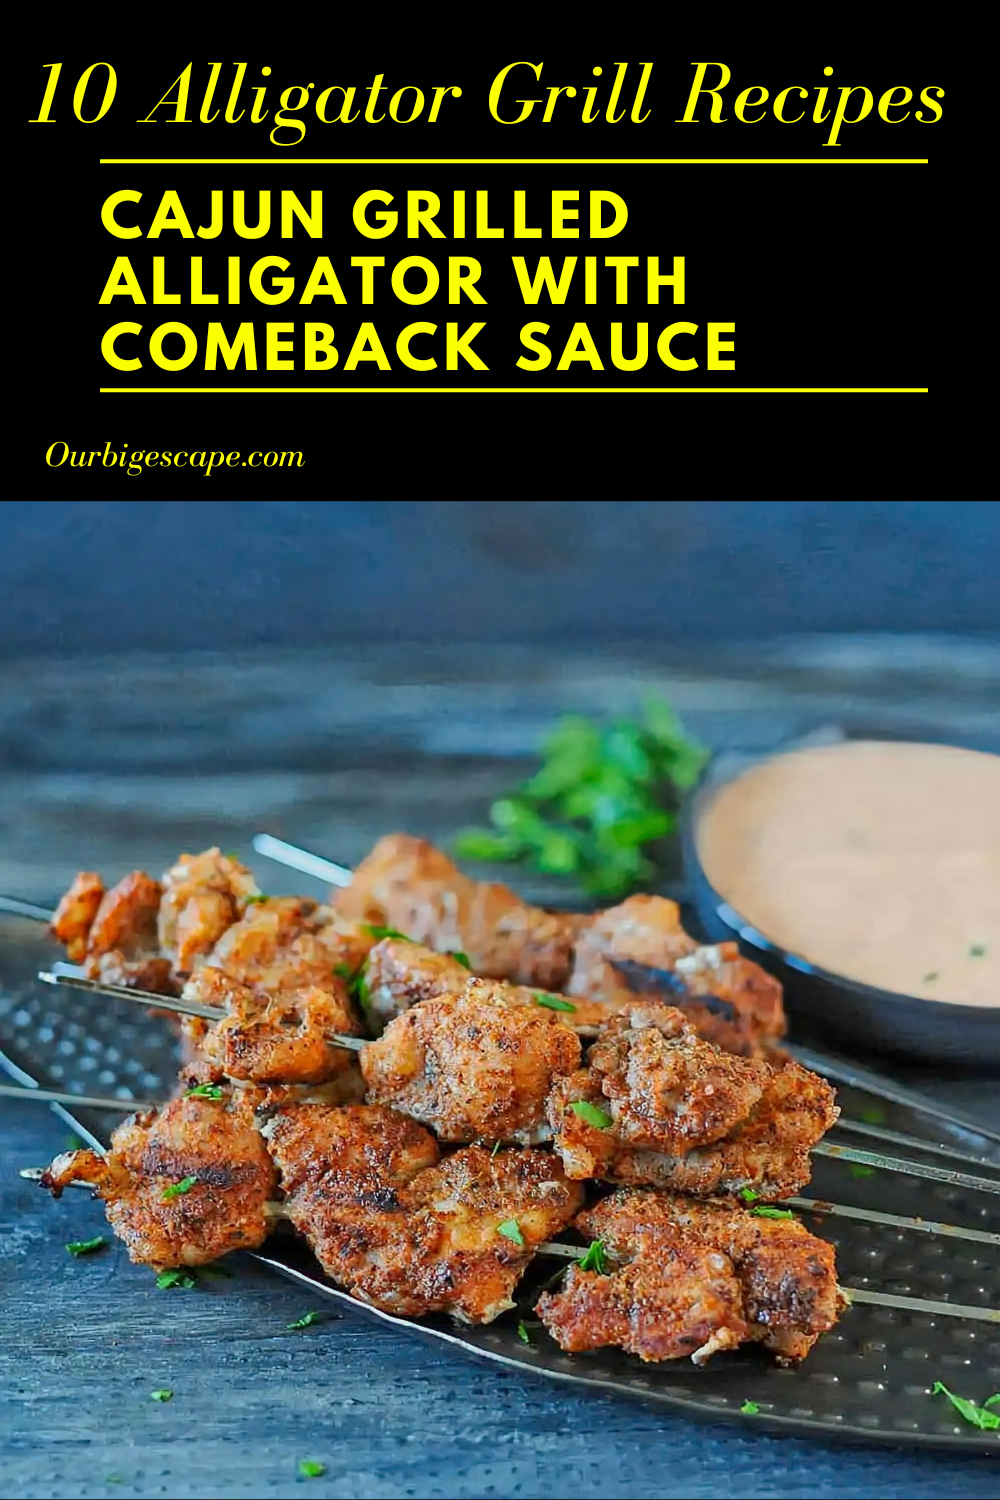 Cajun Grilled Alligator with Comeback Sauce